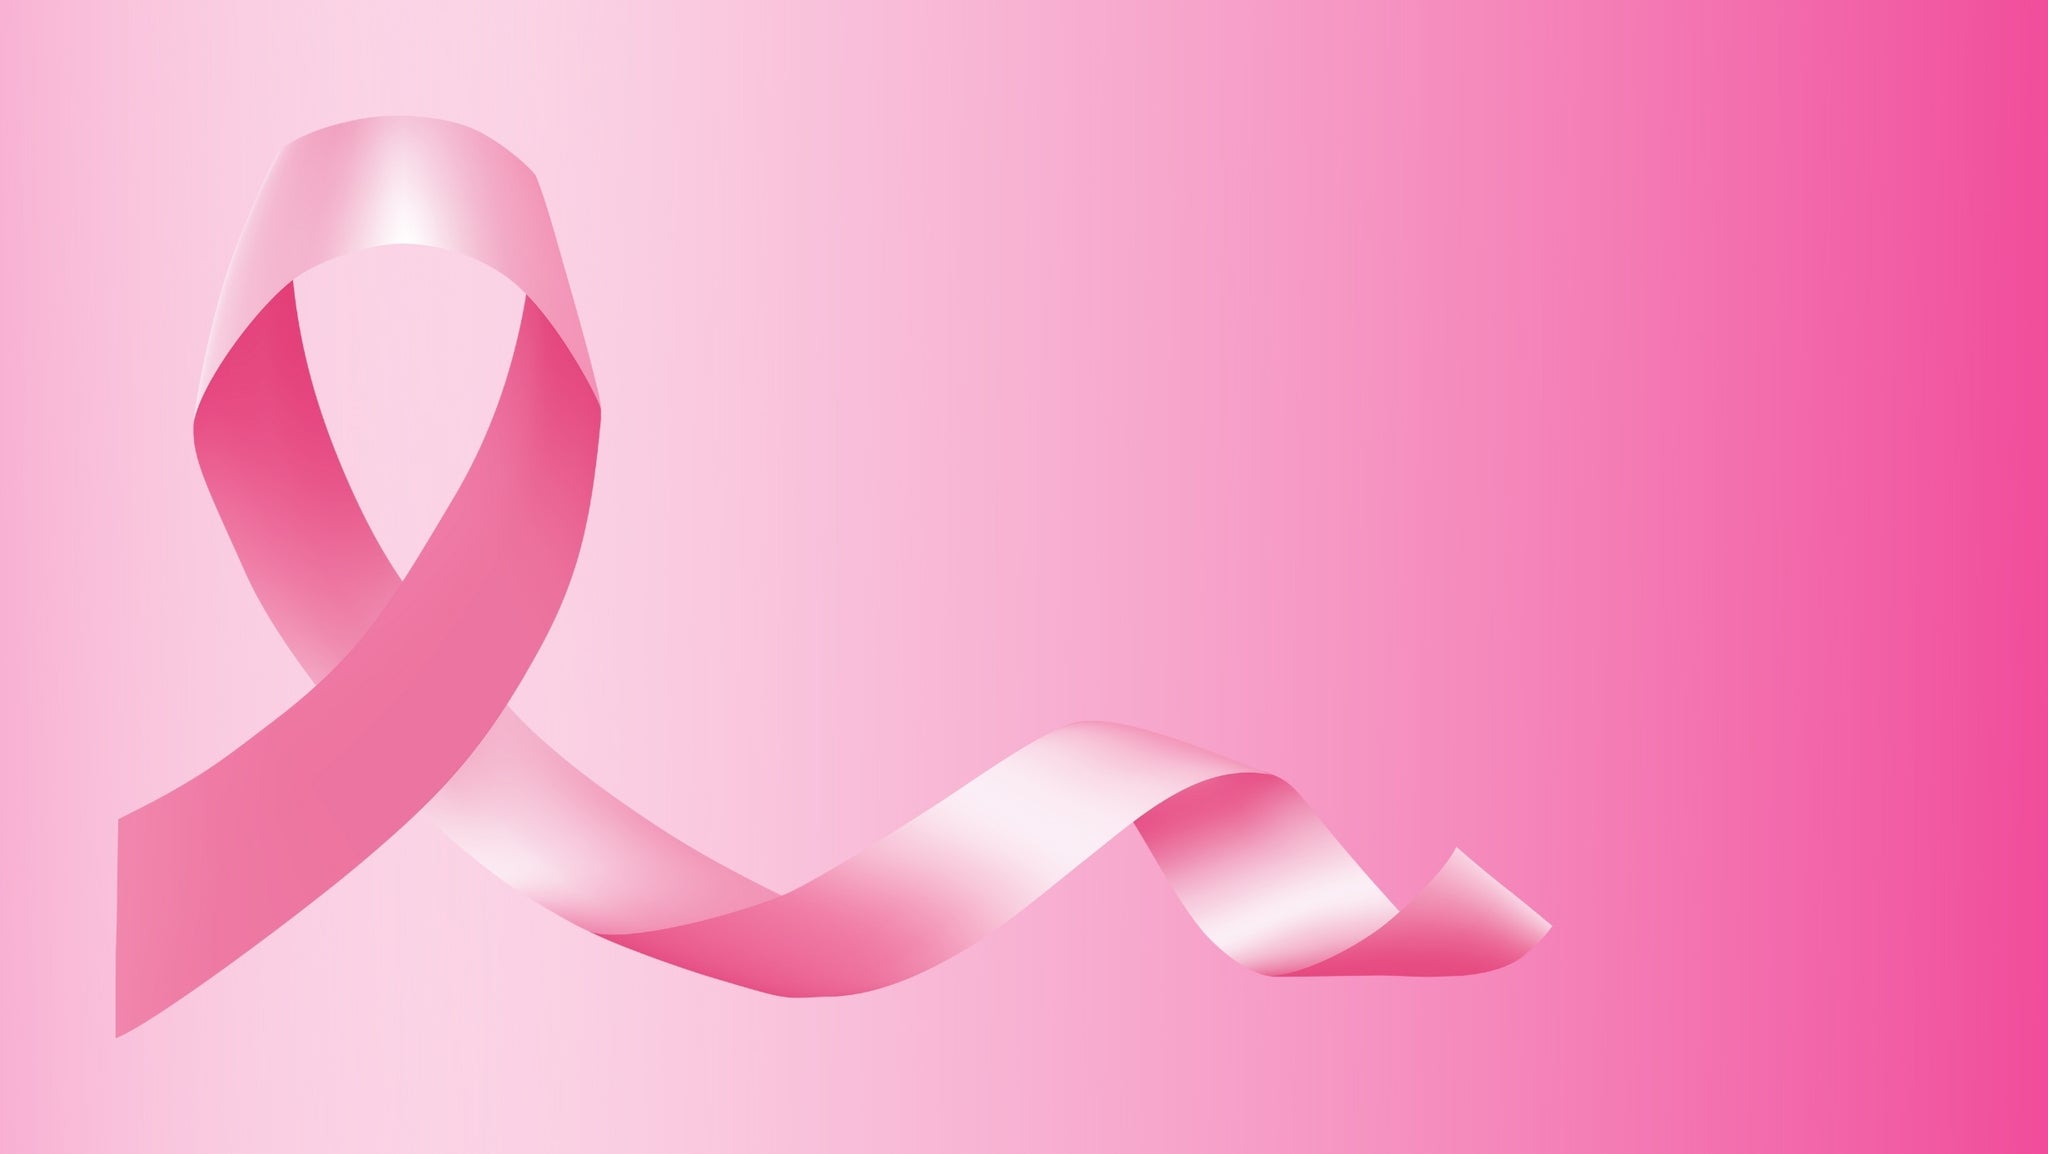 #ShareTheHiLove with The Lynn Sage Breast Cancer Foundation